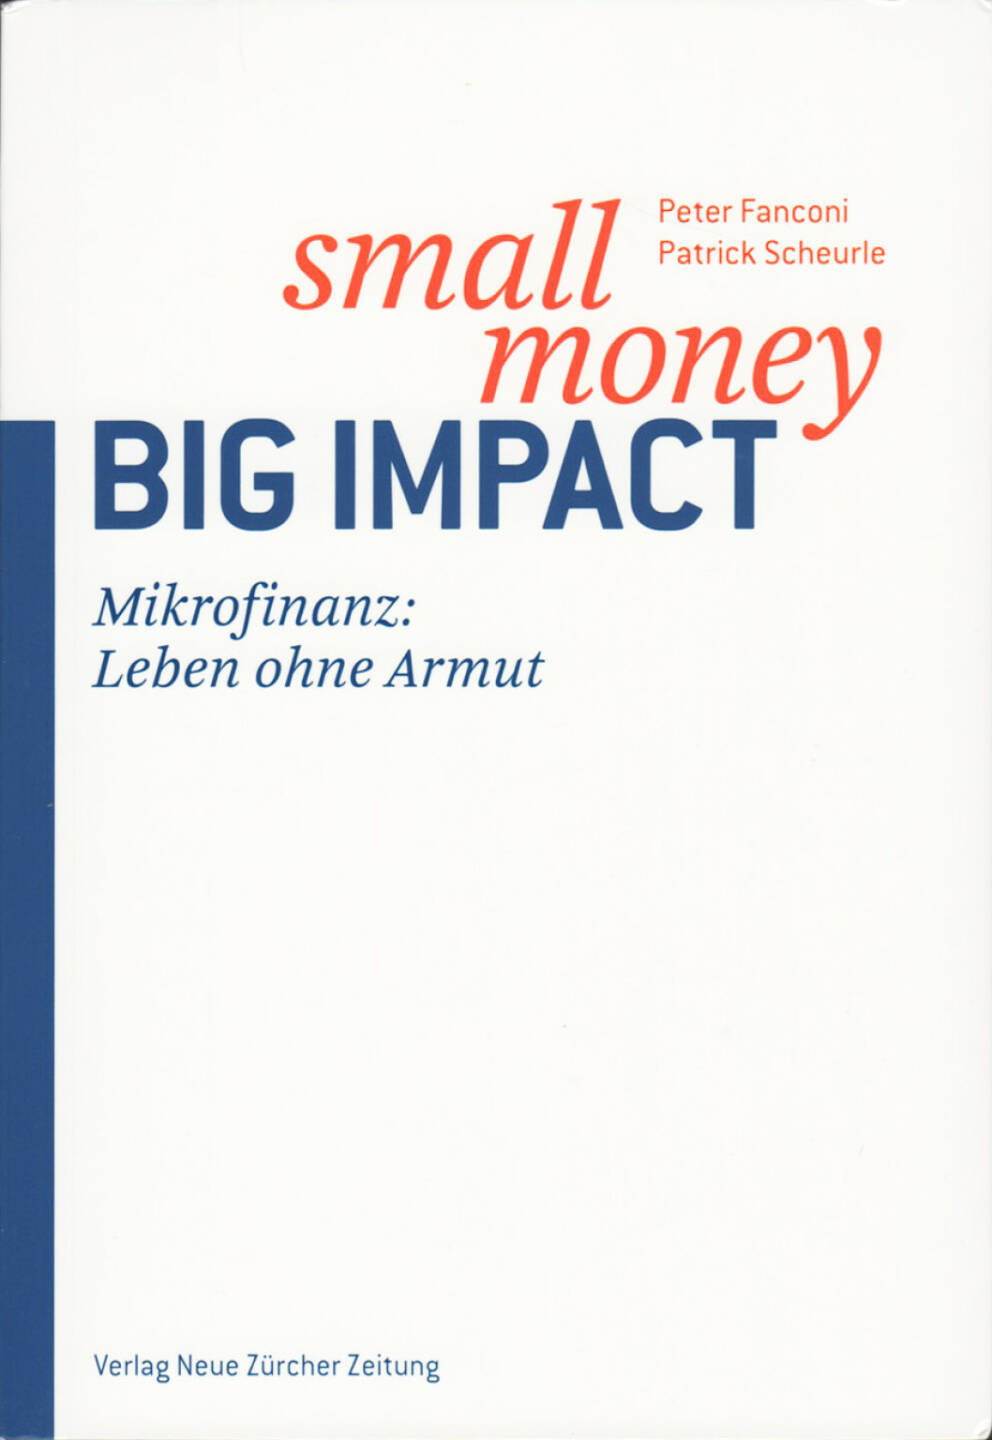 Peter Fanconi, Patrick Scheurle - Small Money - Big Impact: Mikrofinanz: Eine Zukunft ohne Armut, http://boerse-social.com/financebooks/show/peter_fanconi_patrick_scheurle_-_small_money_-_big_impact_mikrofinanz_eine_zukunft_ohne_armut